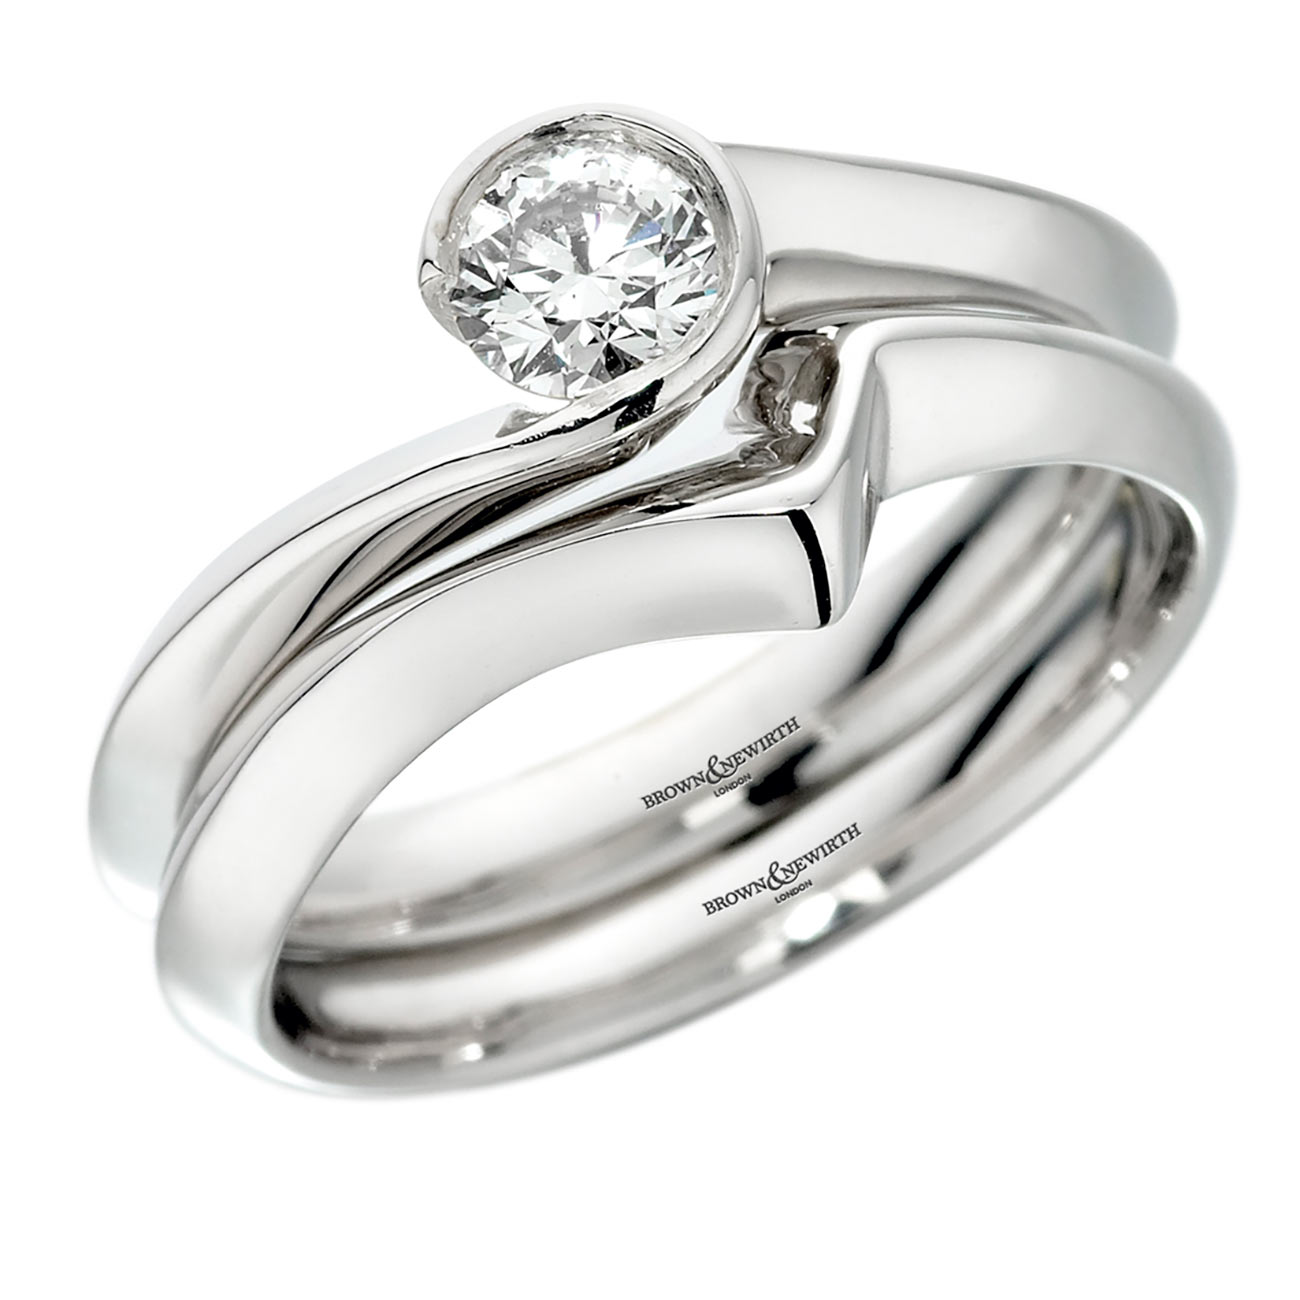 Drakes Jewellers Ring Feature Wed Wedding Cornwall Devon Bride5